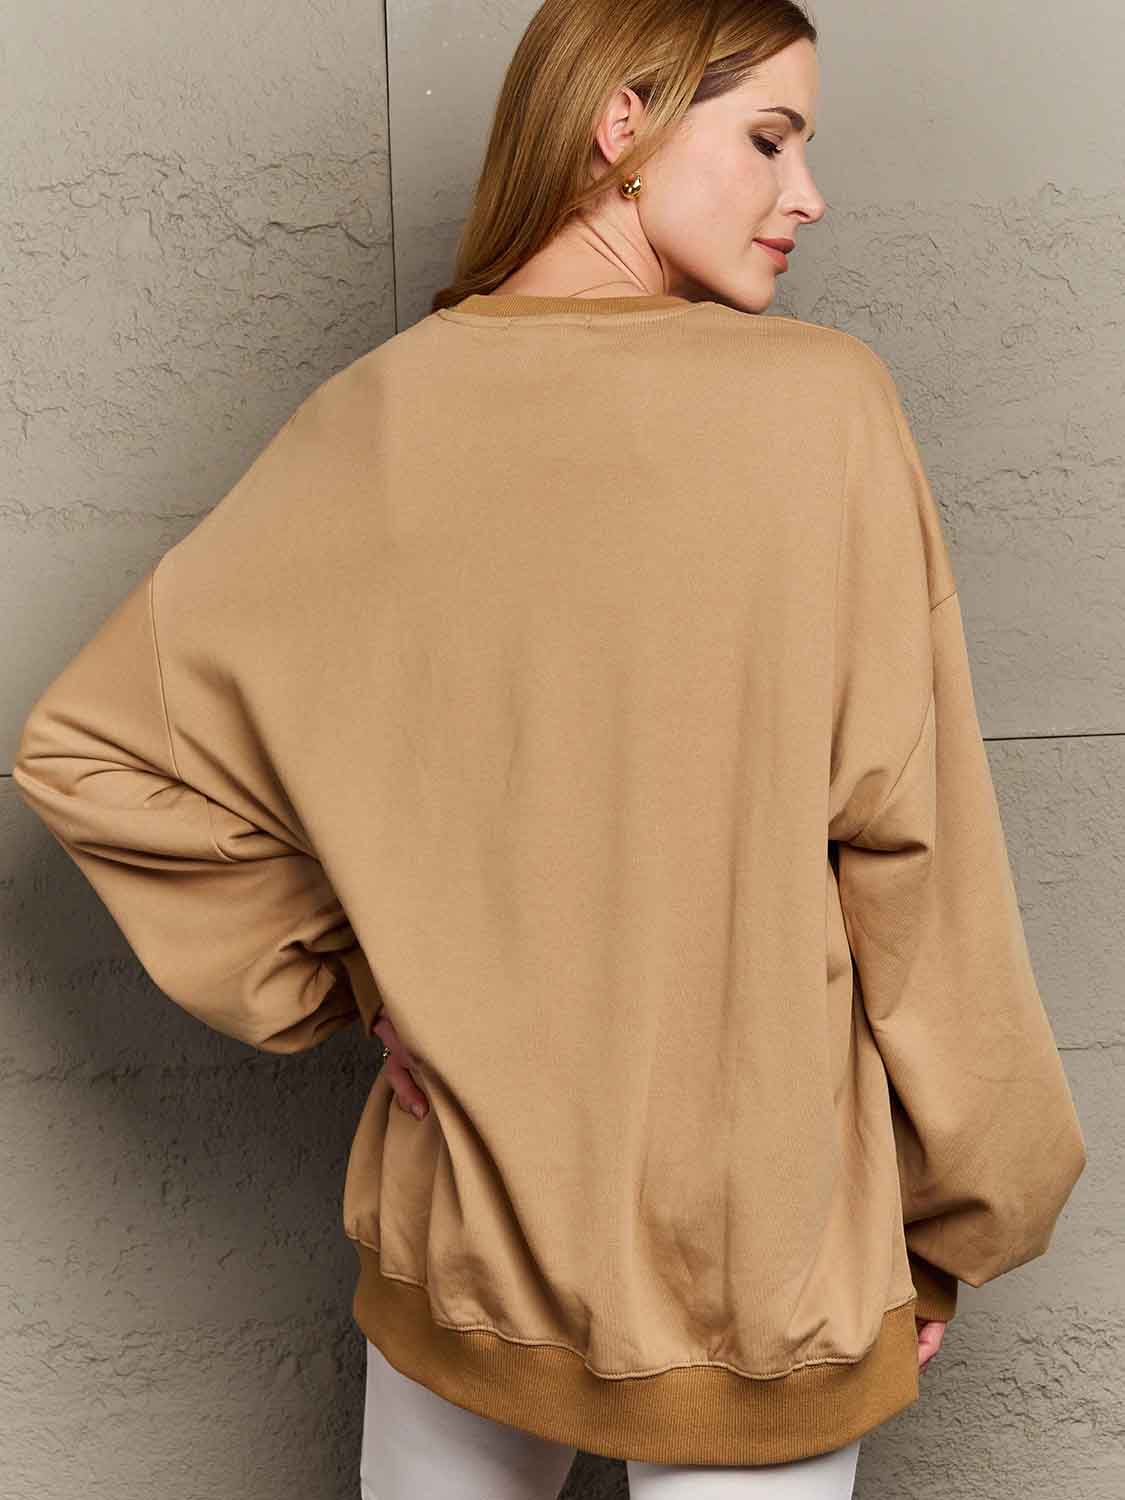 Simply Love Full Size Dropped Shoulder Sweatshirt - Kawaii Stop - Kawaii Shop